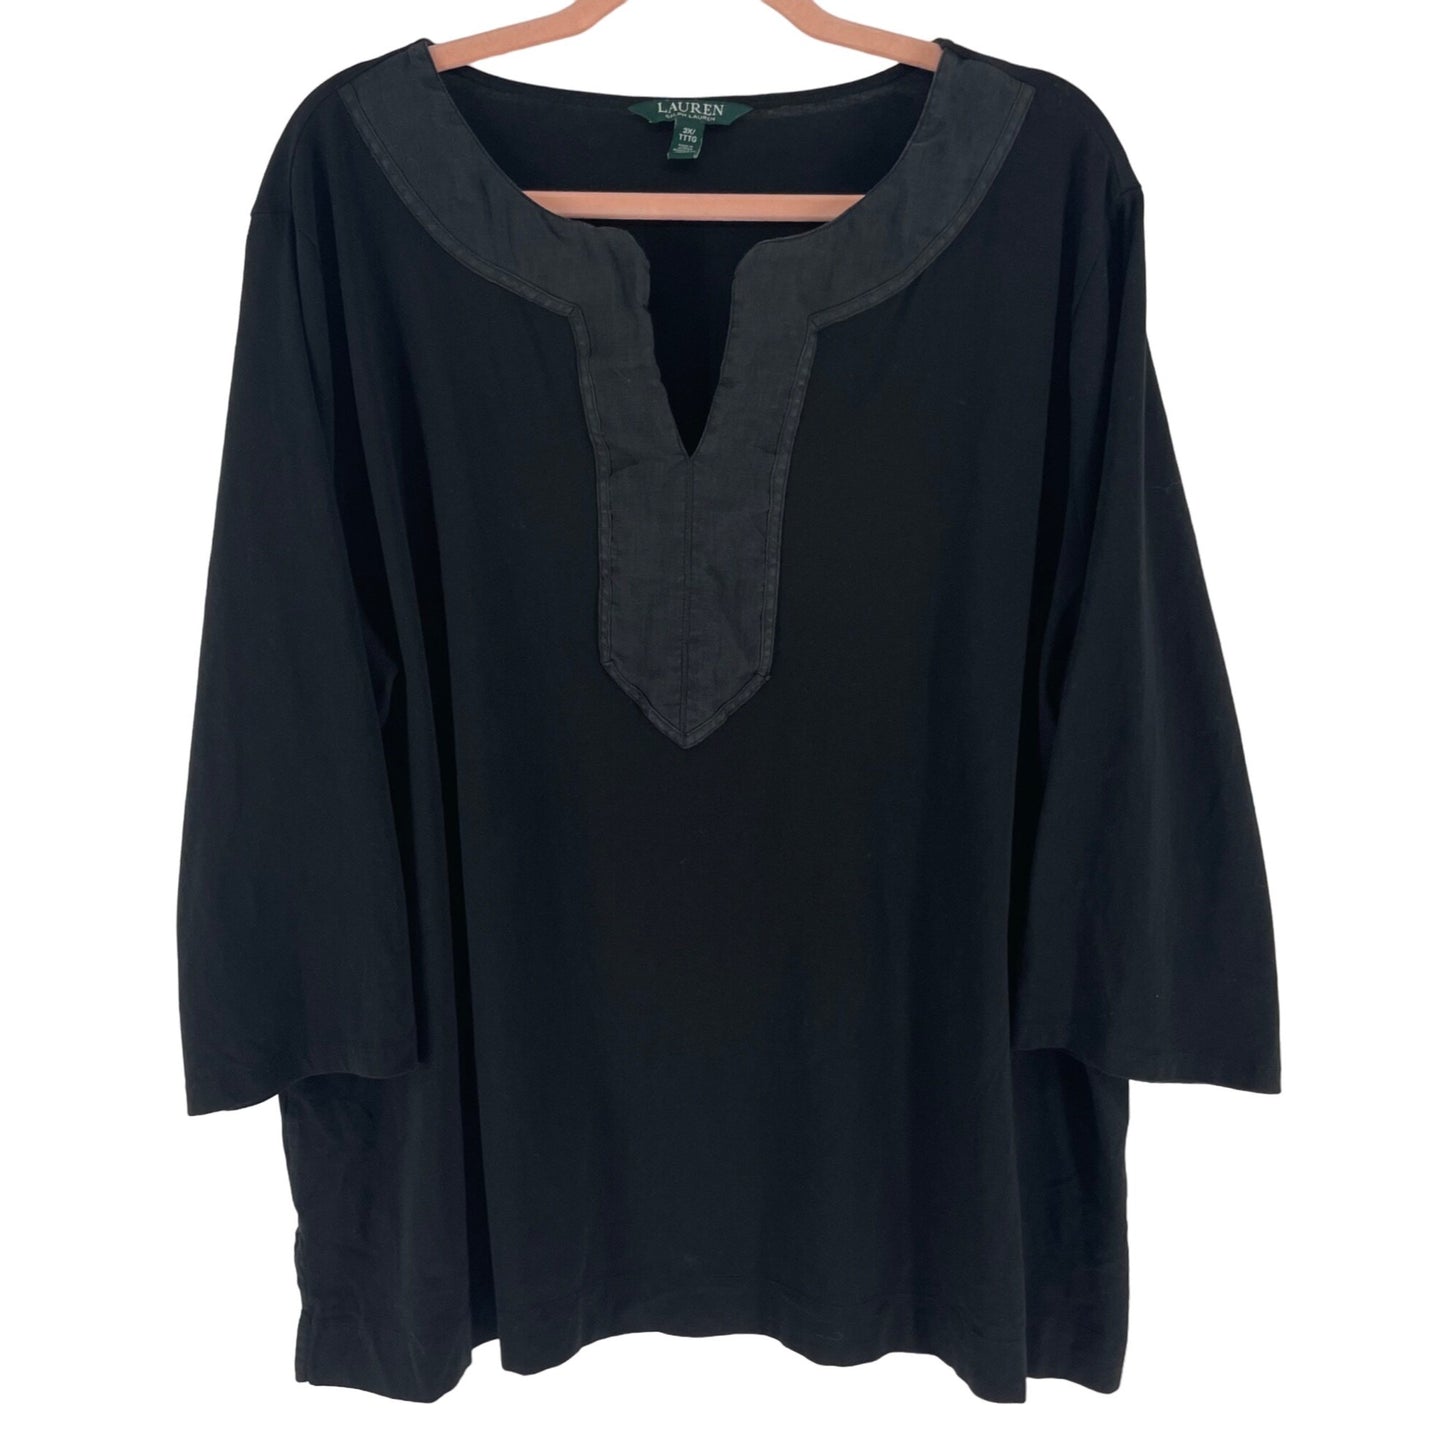 Ralph Lauren Women's Size 3X Black 3/4 Quarter Length Sleeve Top